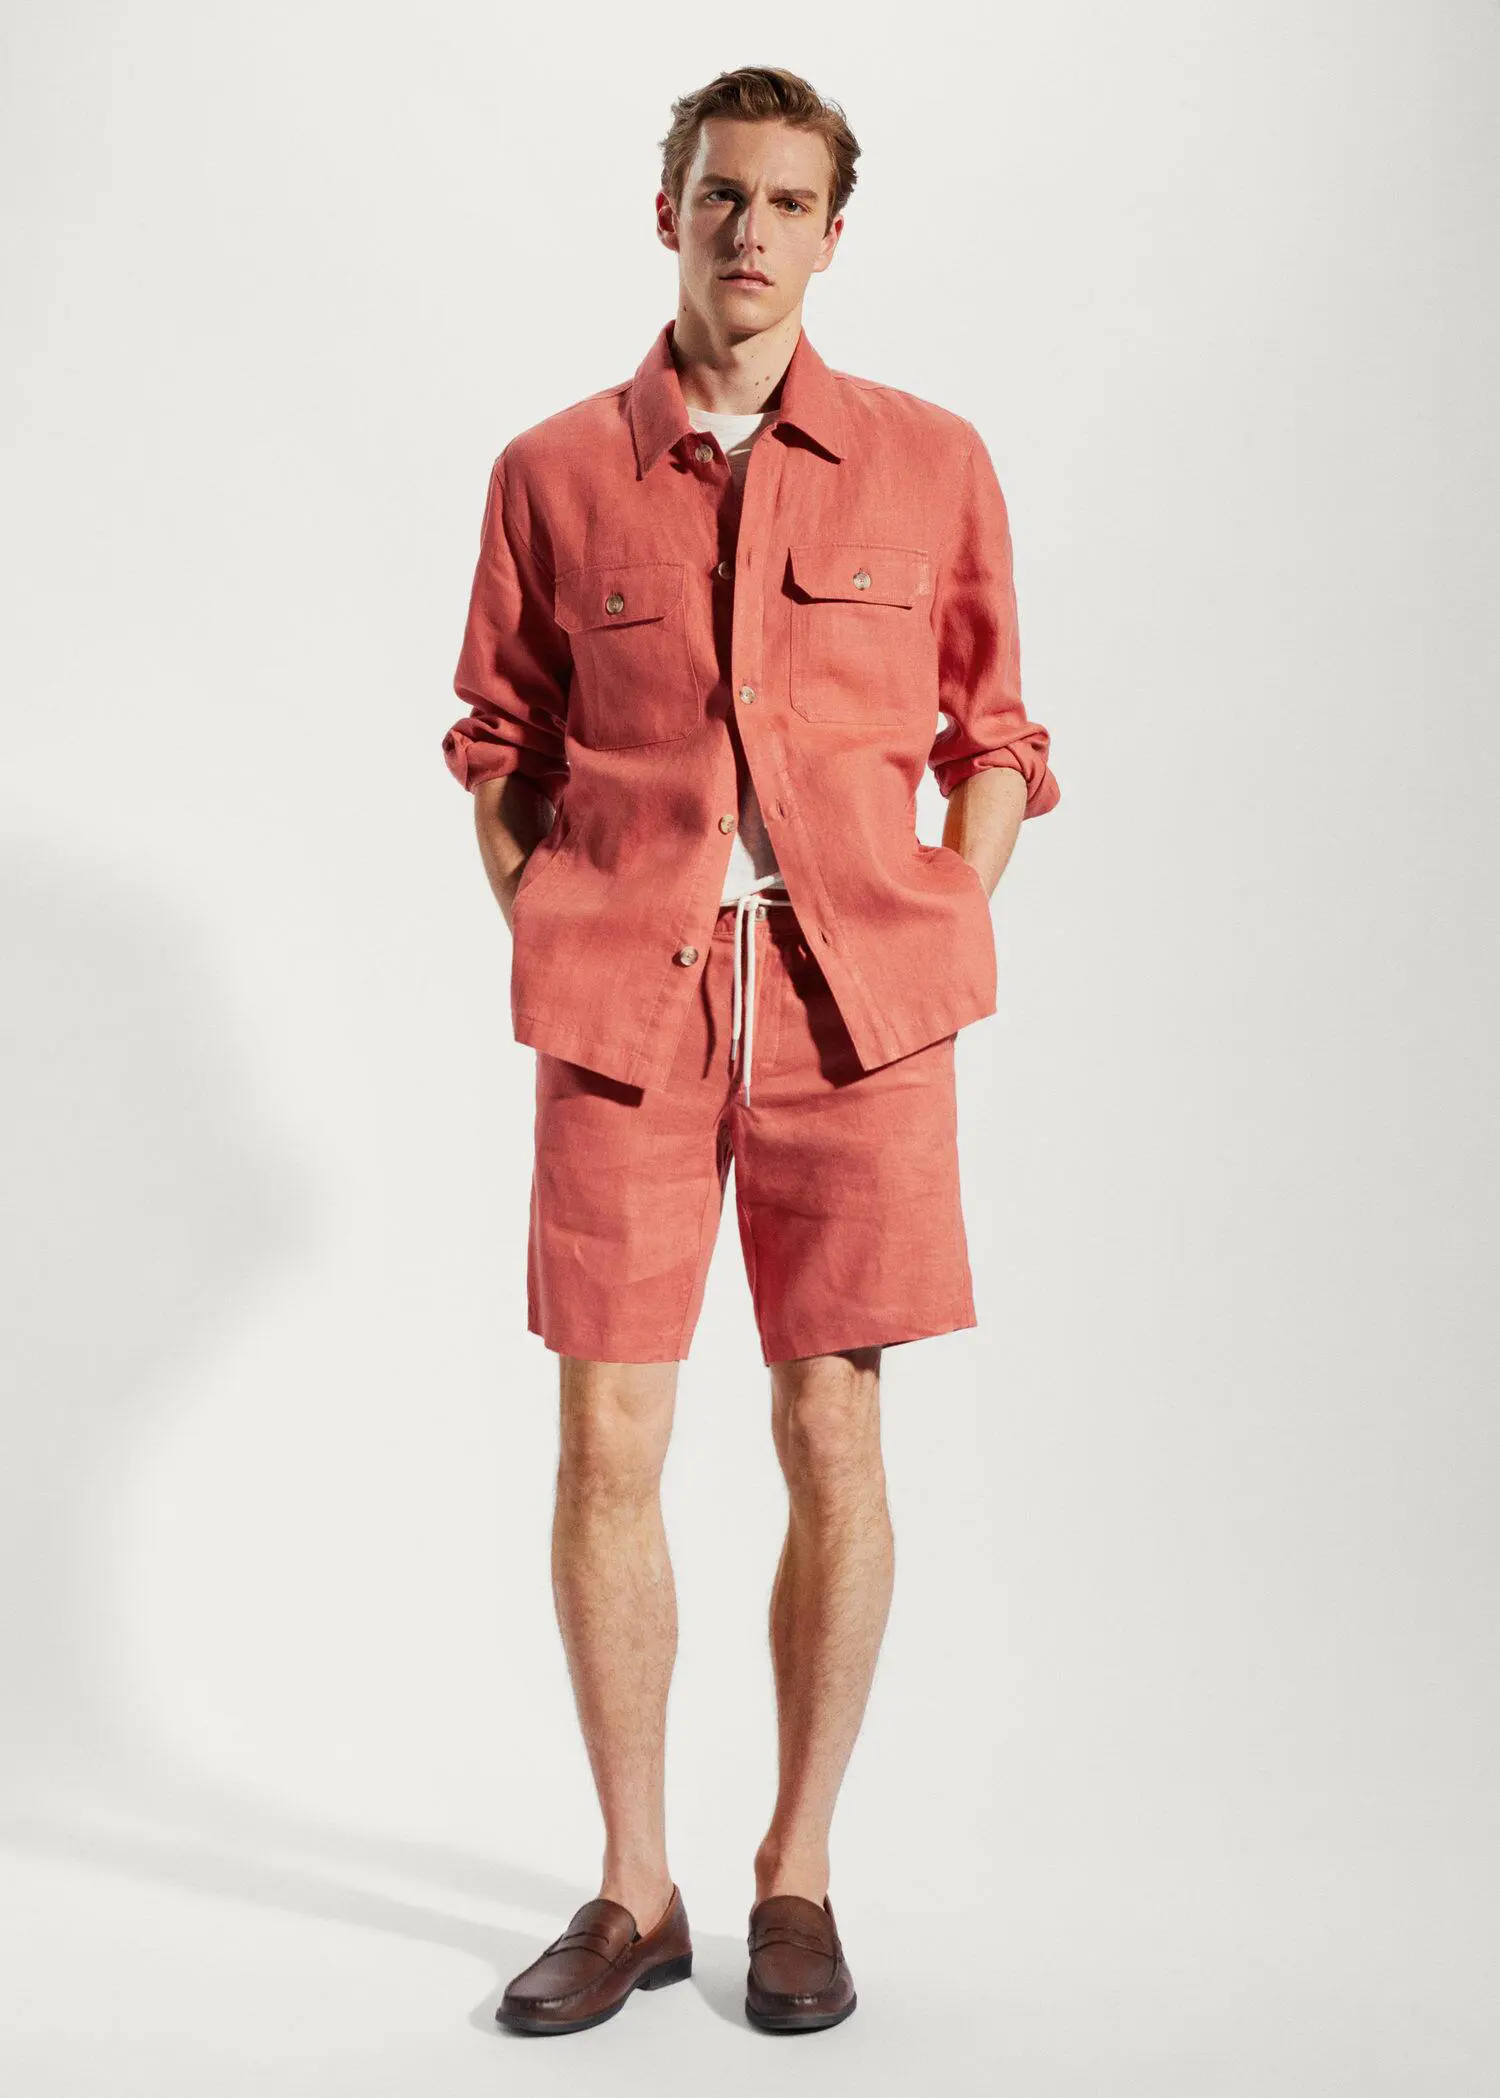 Mango 100% linen bermuda shorts with drawstring. a man wearing a red jacket and shorts. 